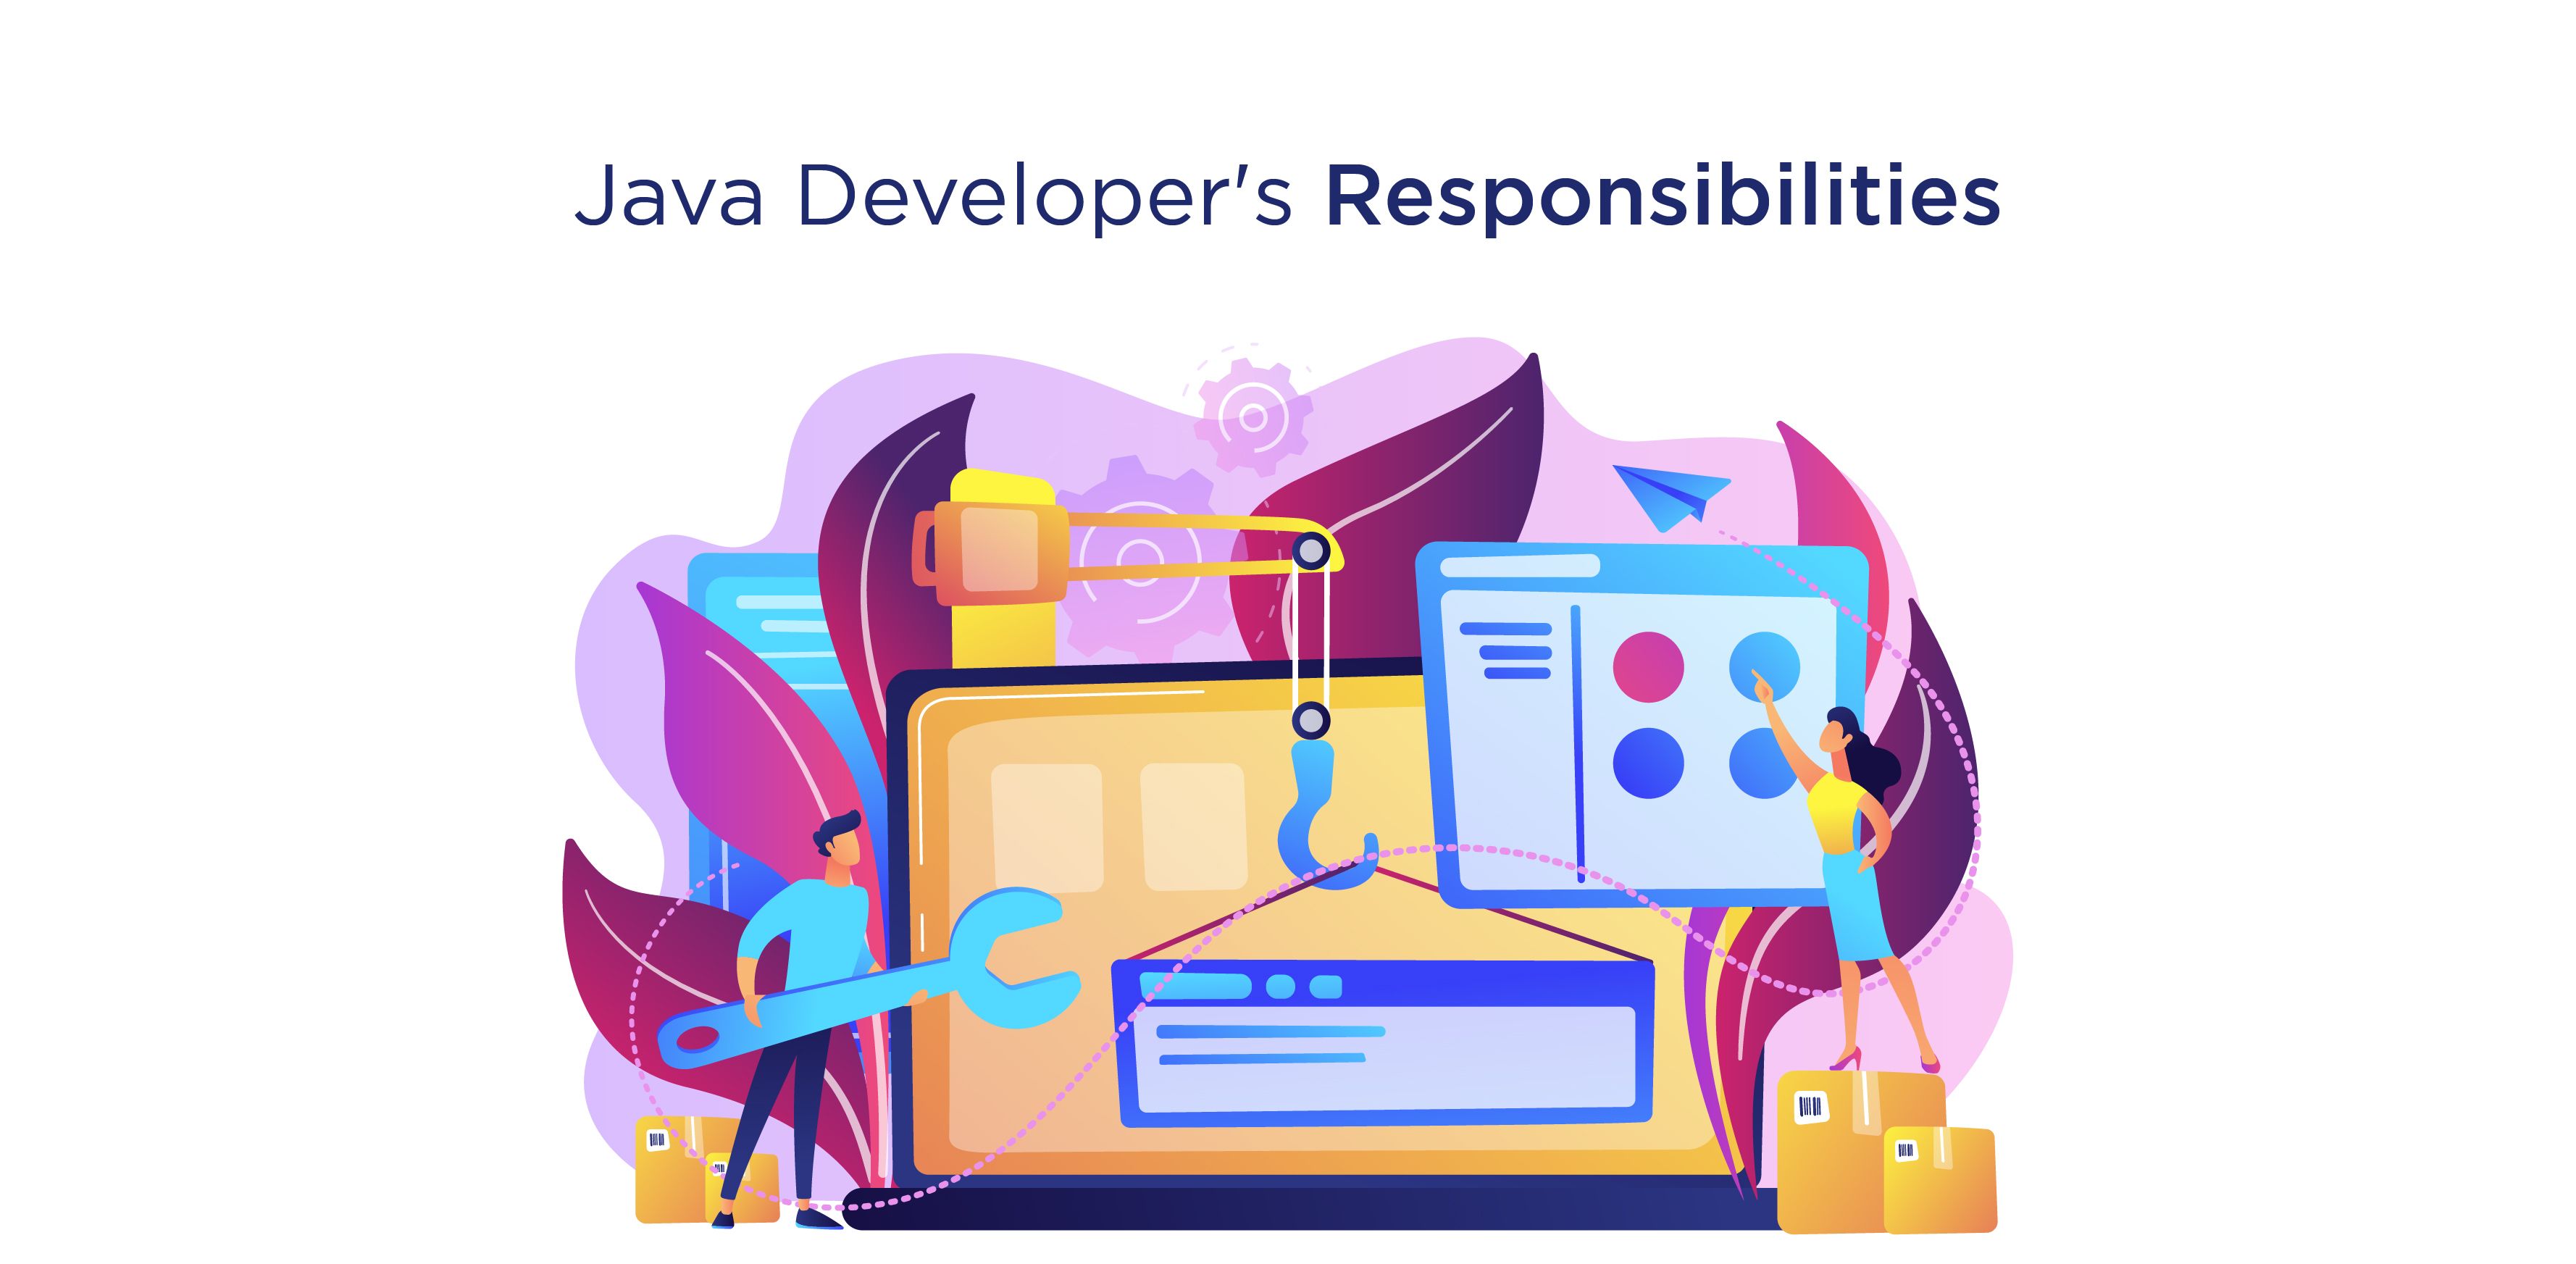 A Java Developer's Responsibilities